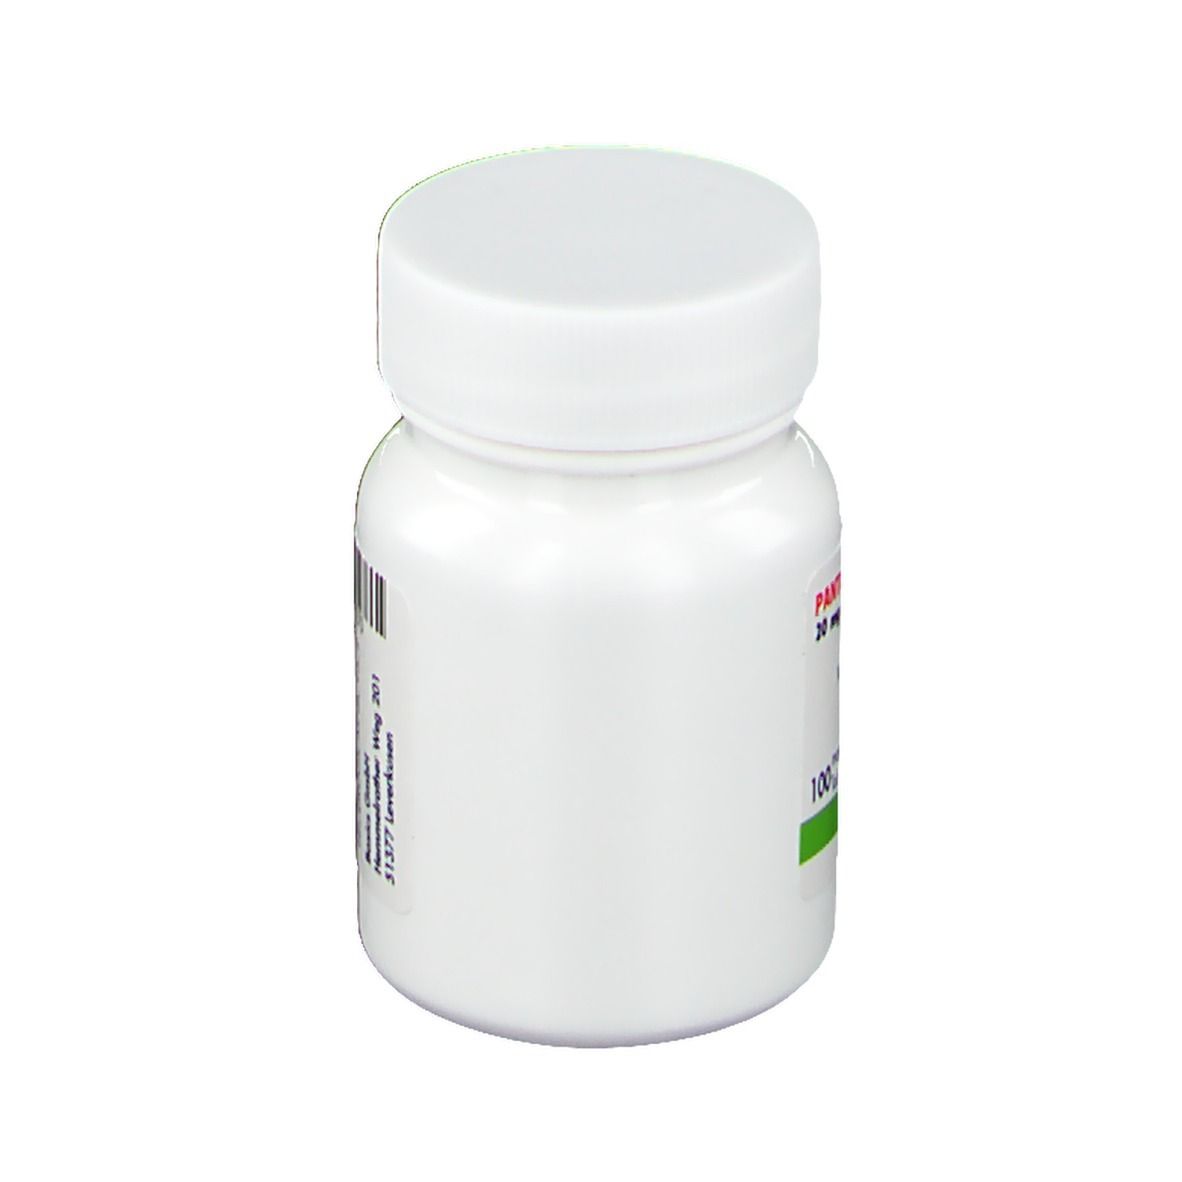 PANTOPRAZOL BASICS 20 mg